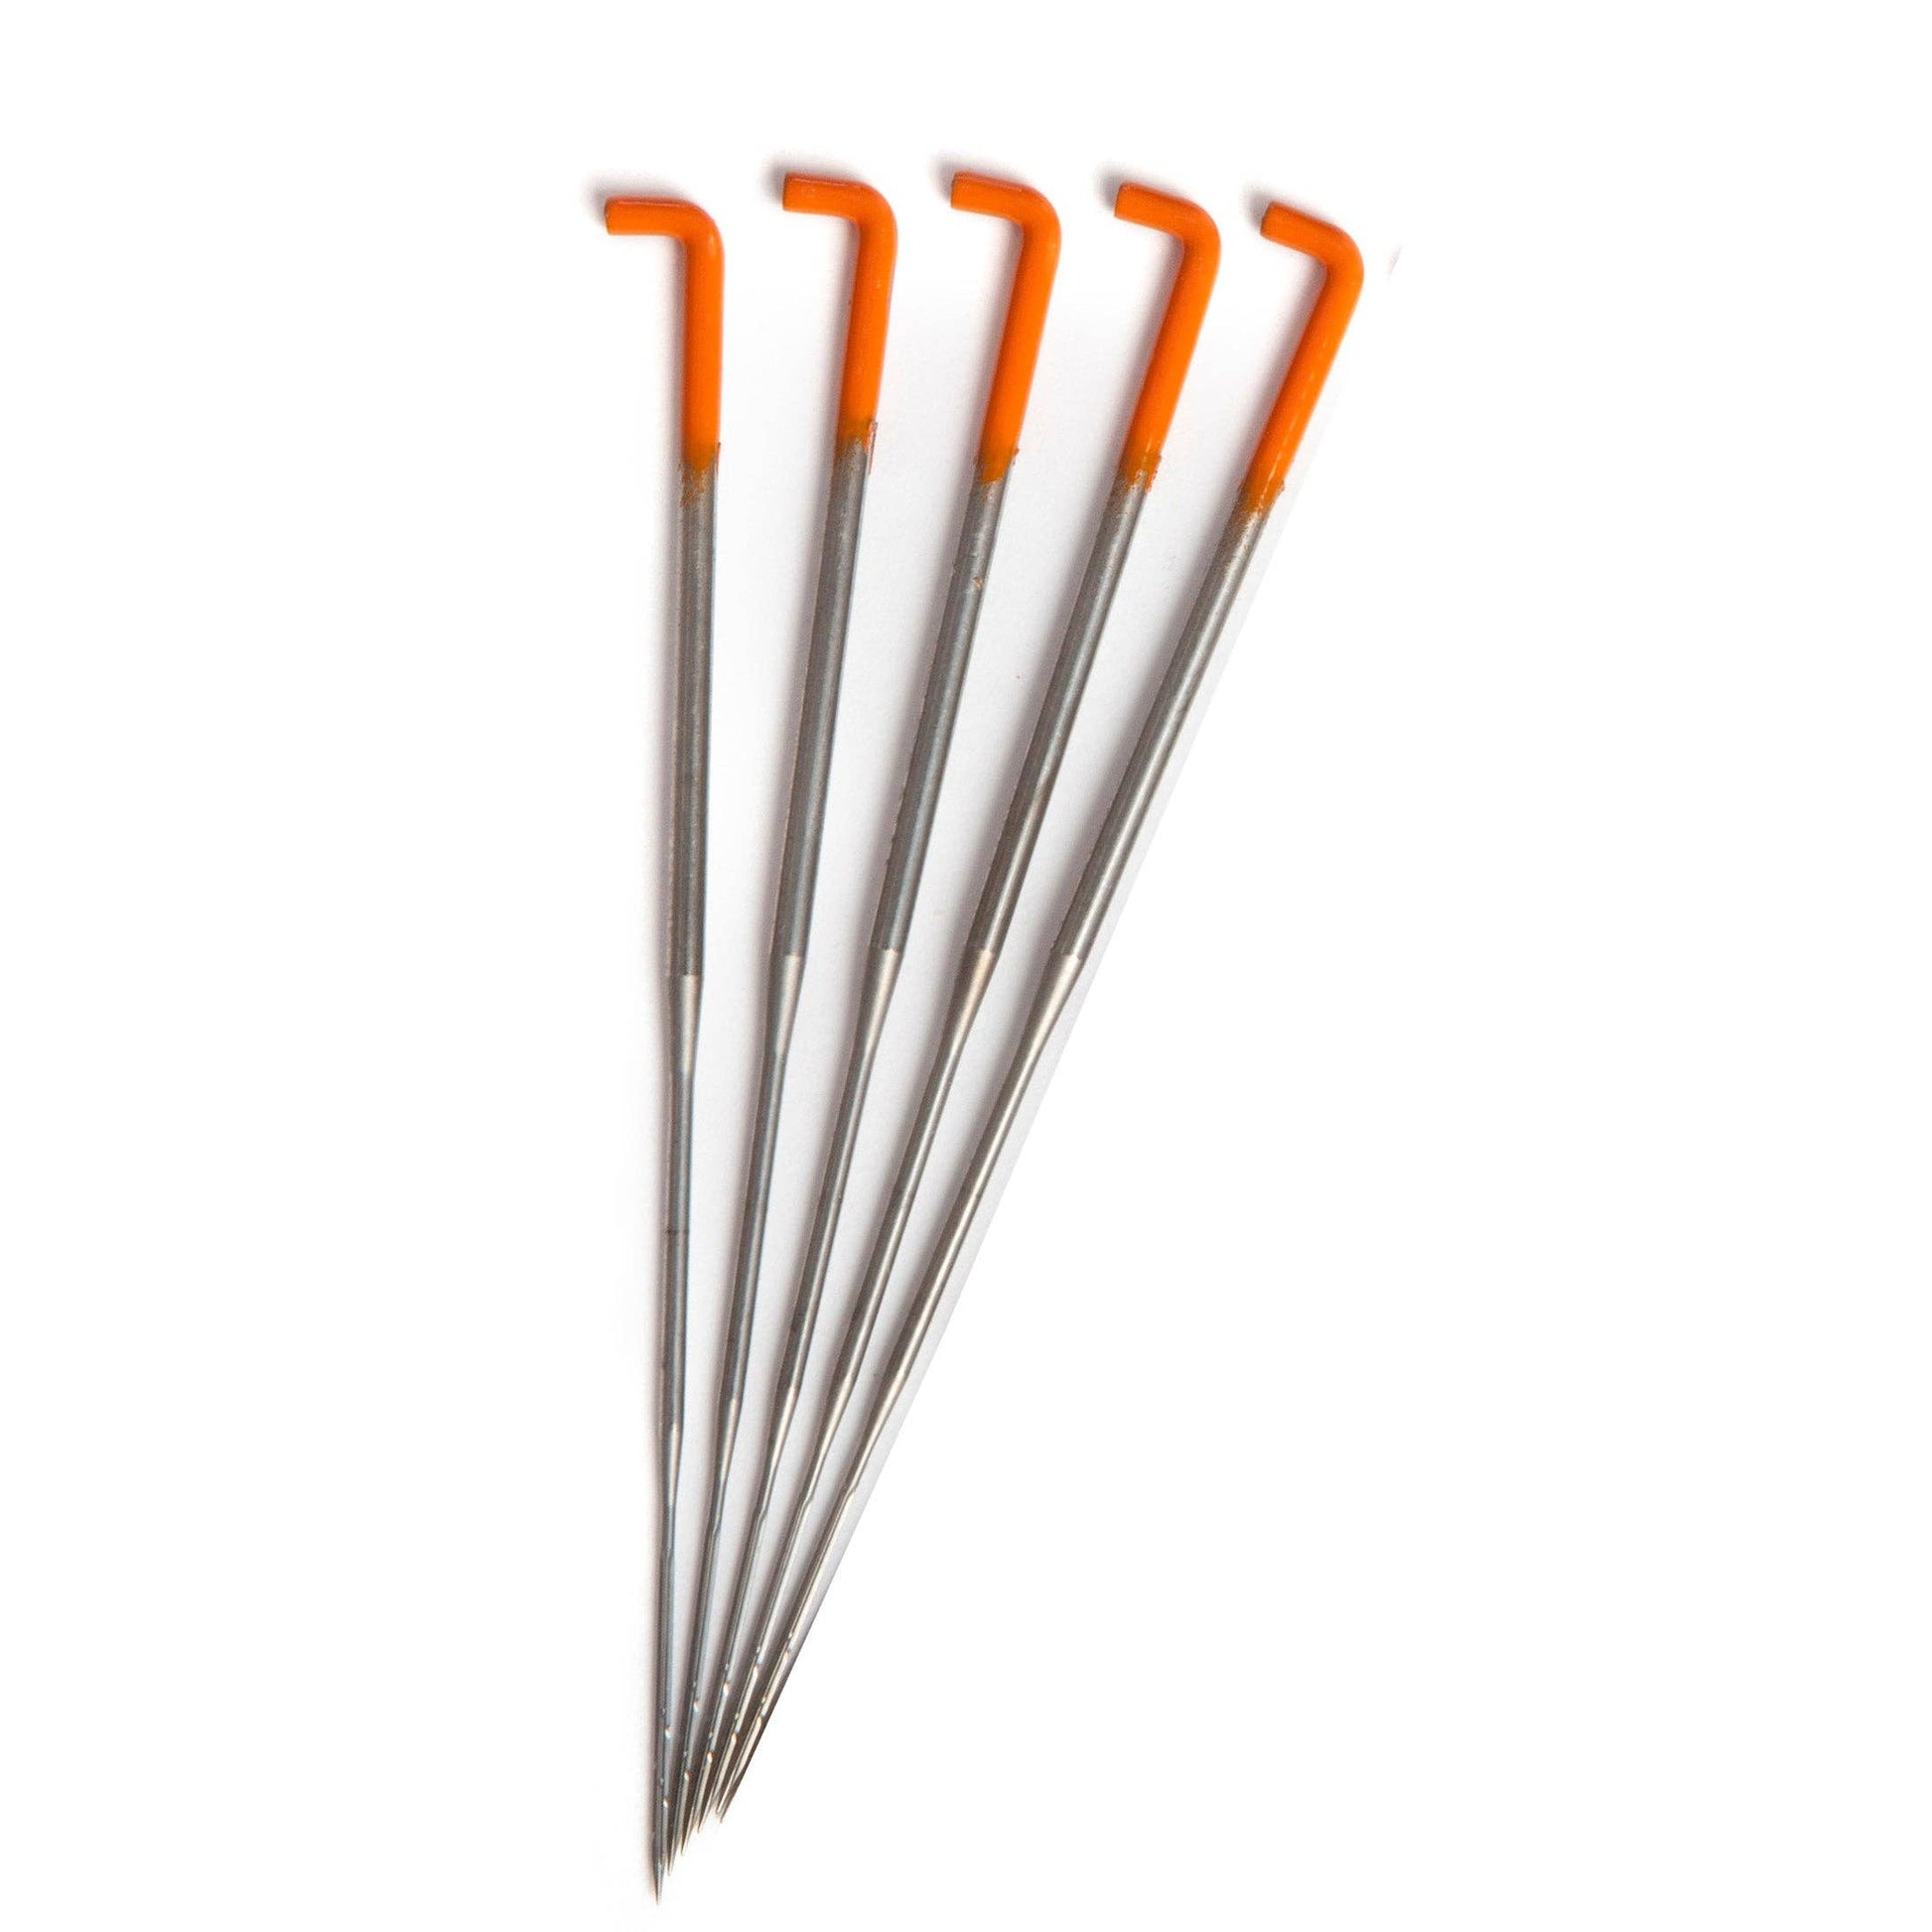 Basic Tools Needle Felting Kit by Desert Breeze Distributing